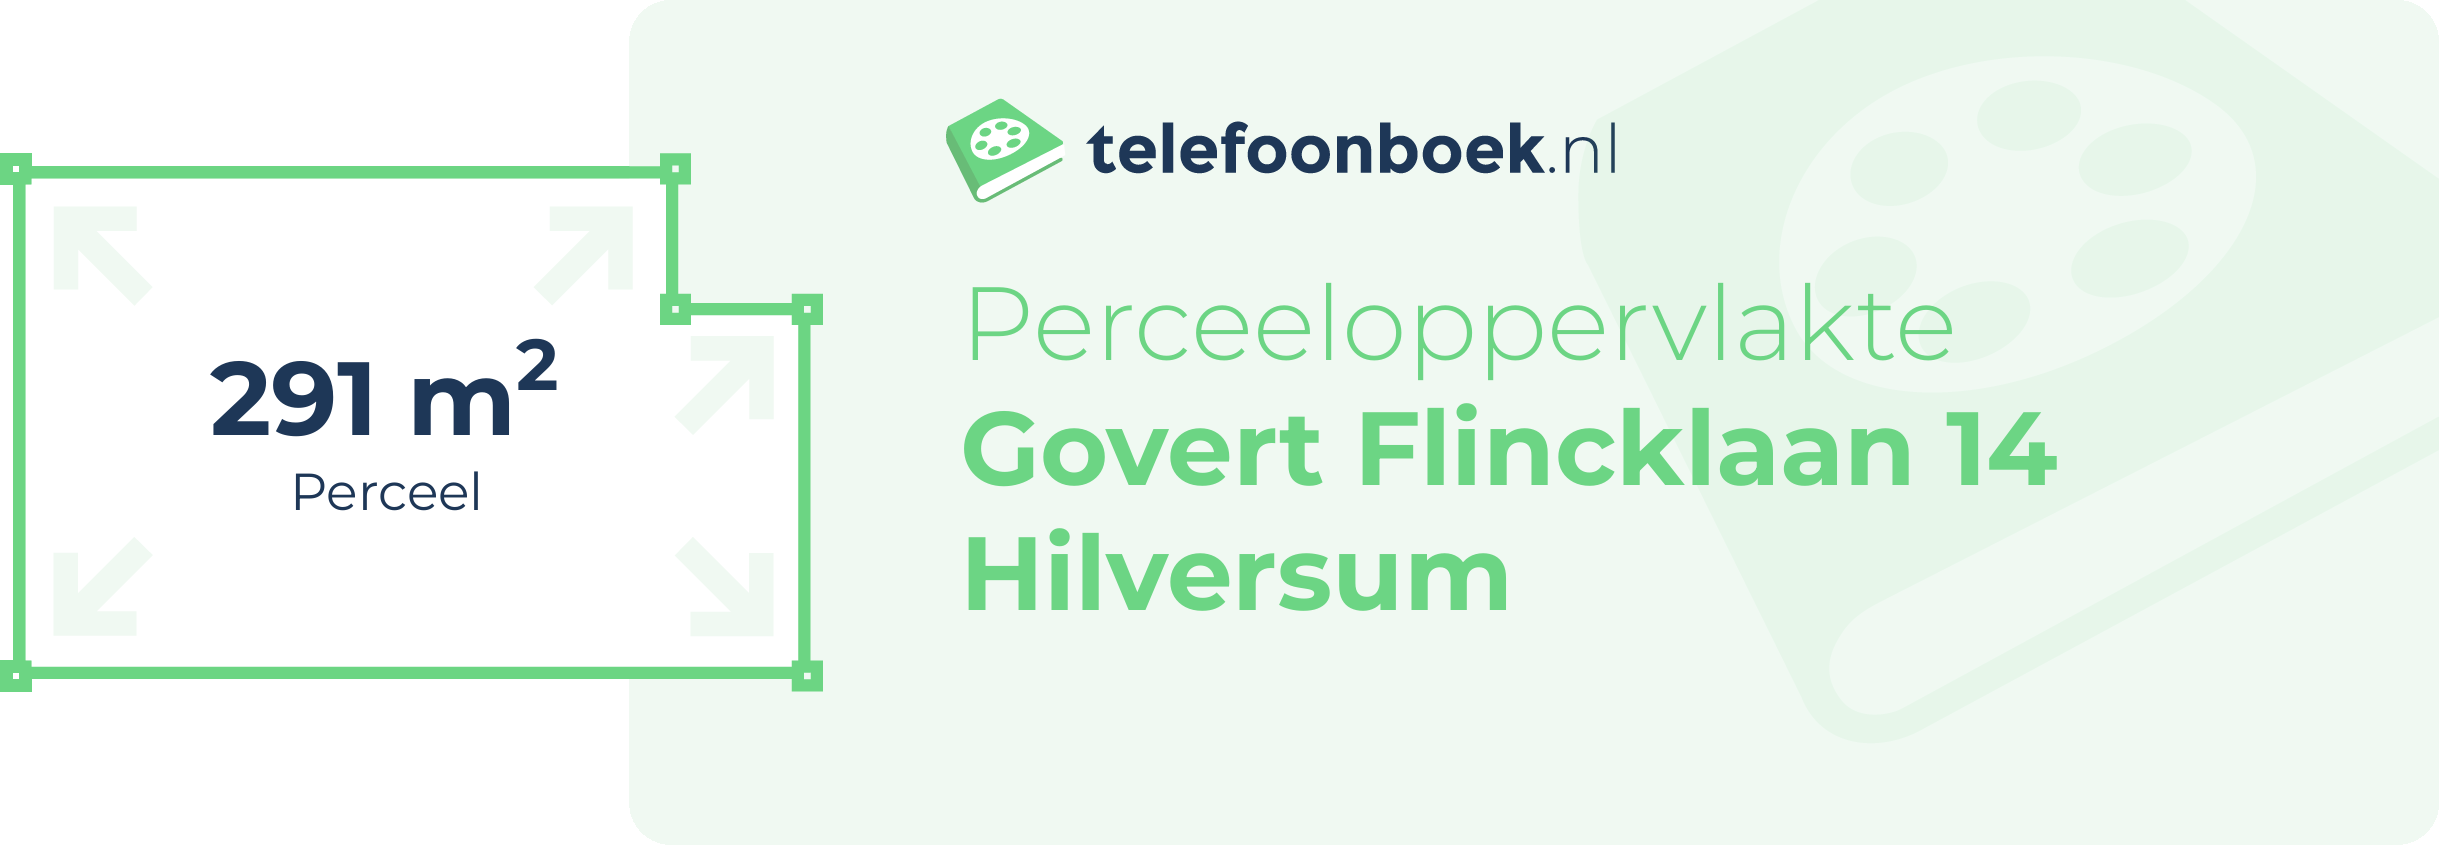 Perceeloppervlakte Govert Flincklaan 14 Hilversum